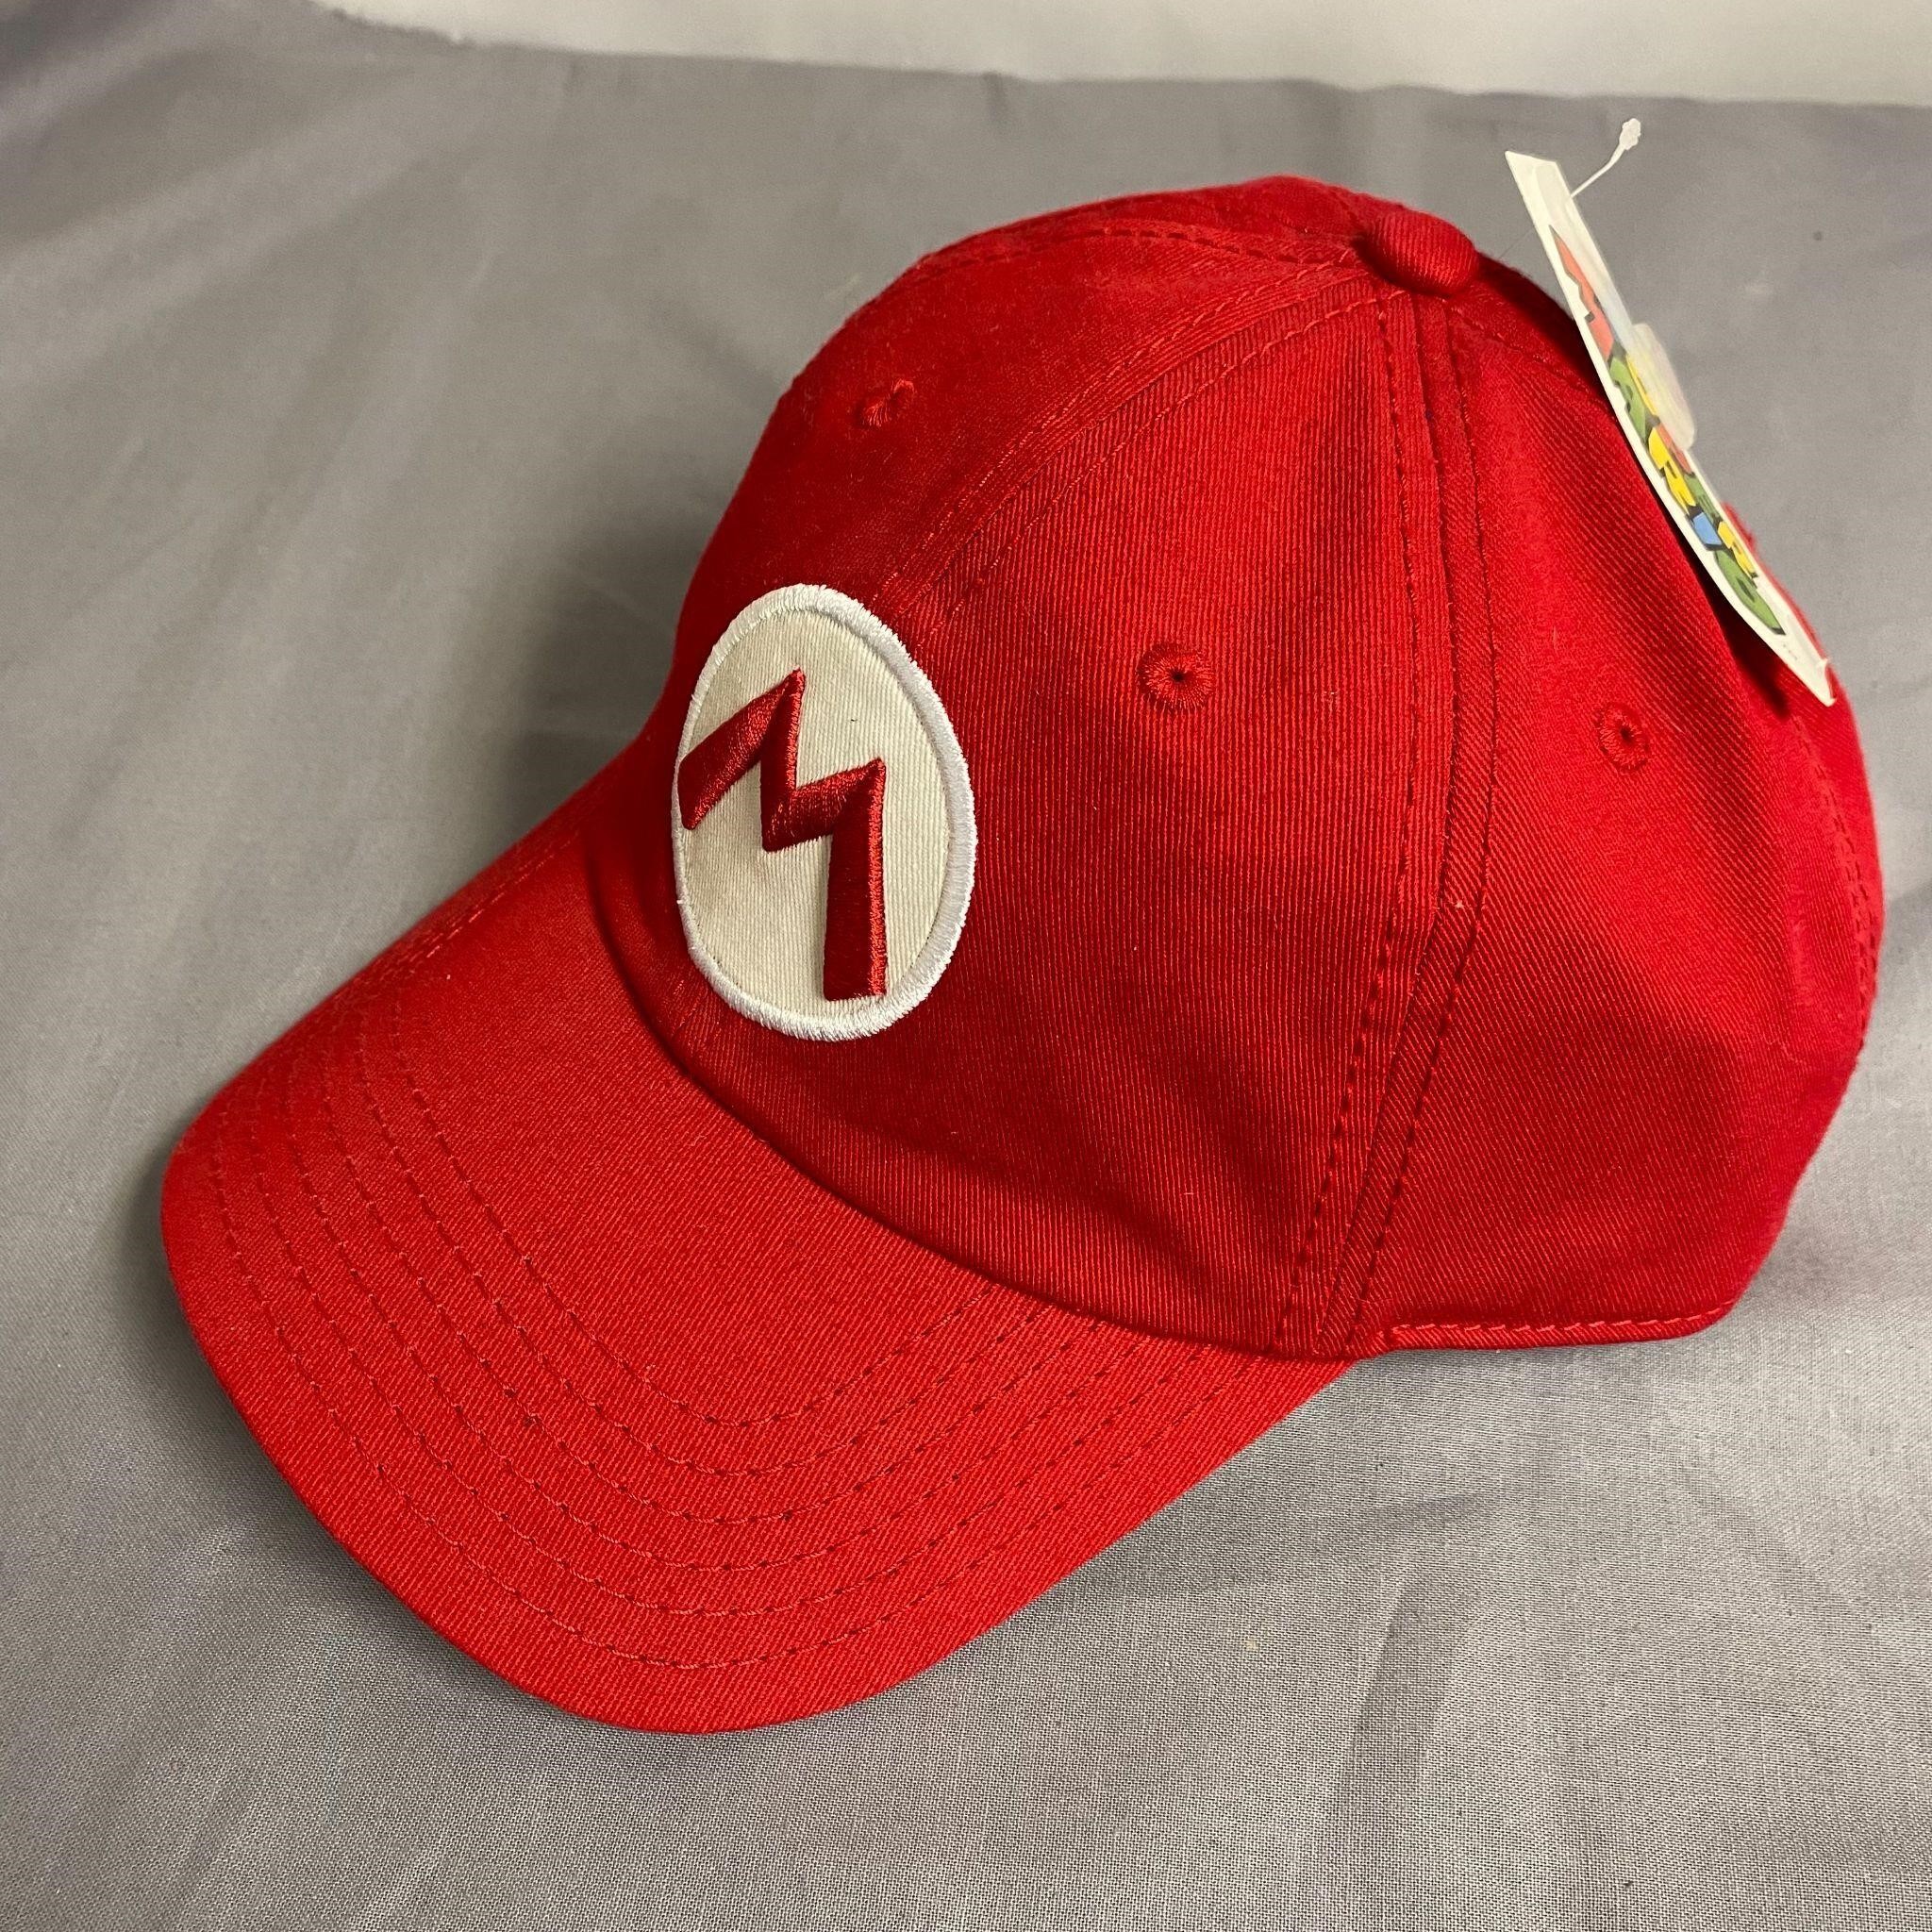 Nintendo Mario Bros Red Snapback Hat - New w/ Tag